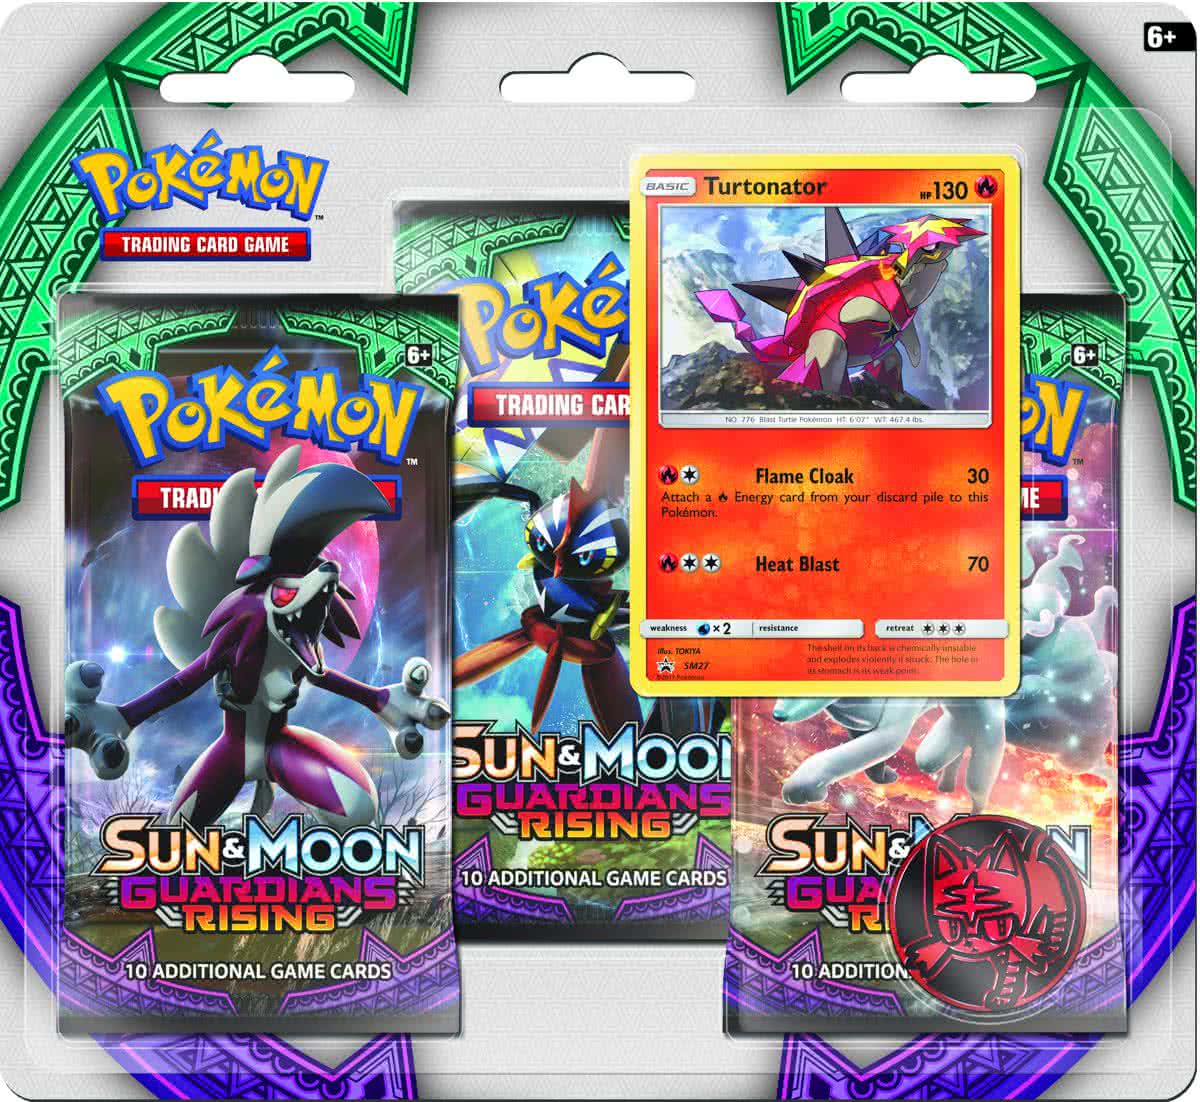 Pokemon Sun & Moon Guardians Rising Blister Pack: Vikavolt of Turtonator (5-Delig) (Pokemon), The Pokemon Company